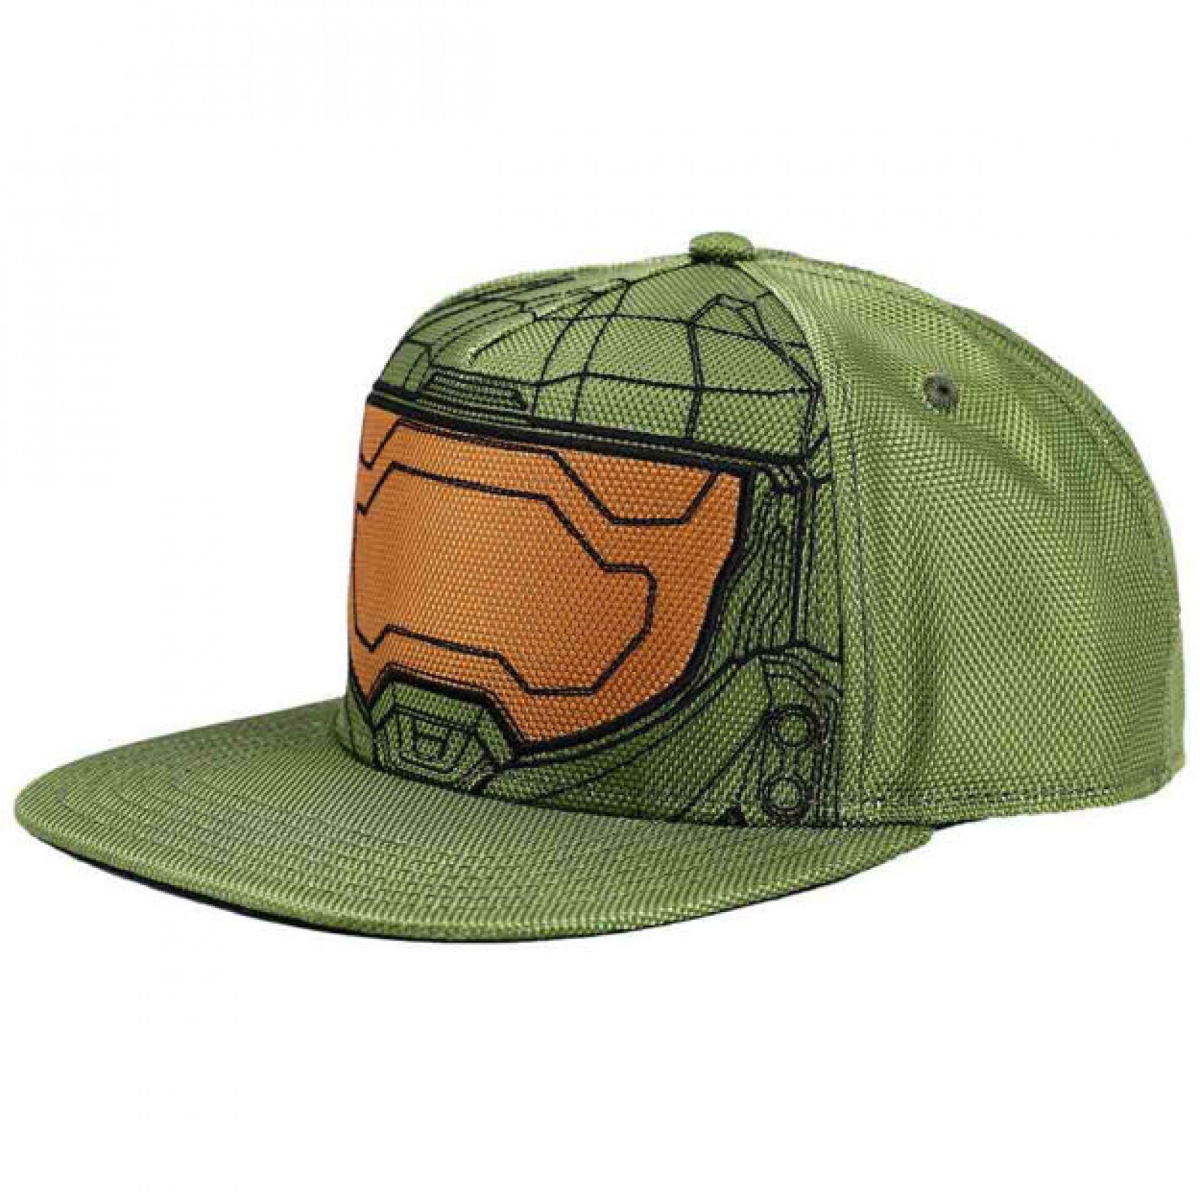 Picture of Halo 833649 Halo Infinite Master Chief Helmet Flat Bill Snapback Hat